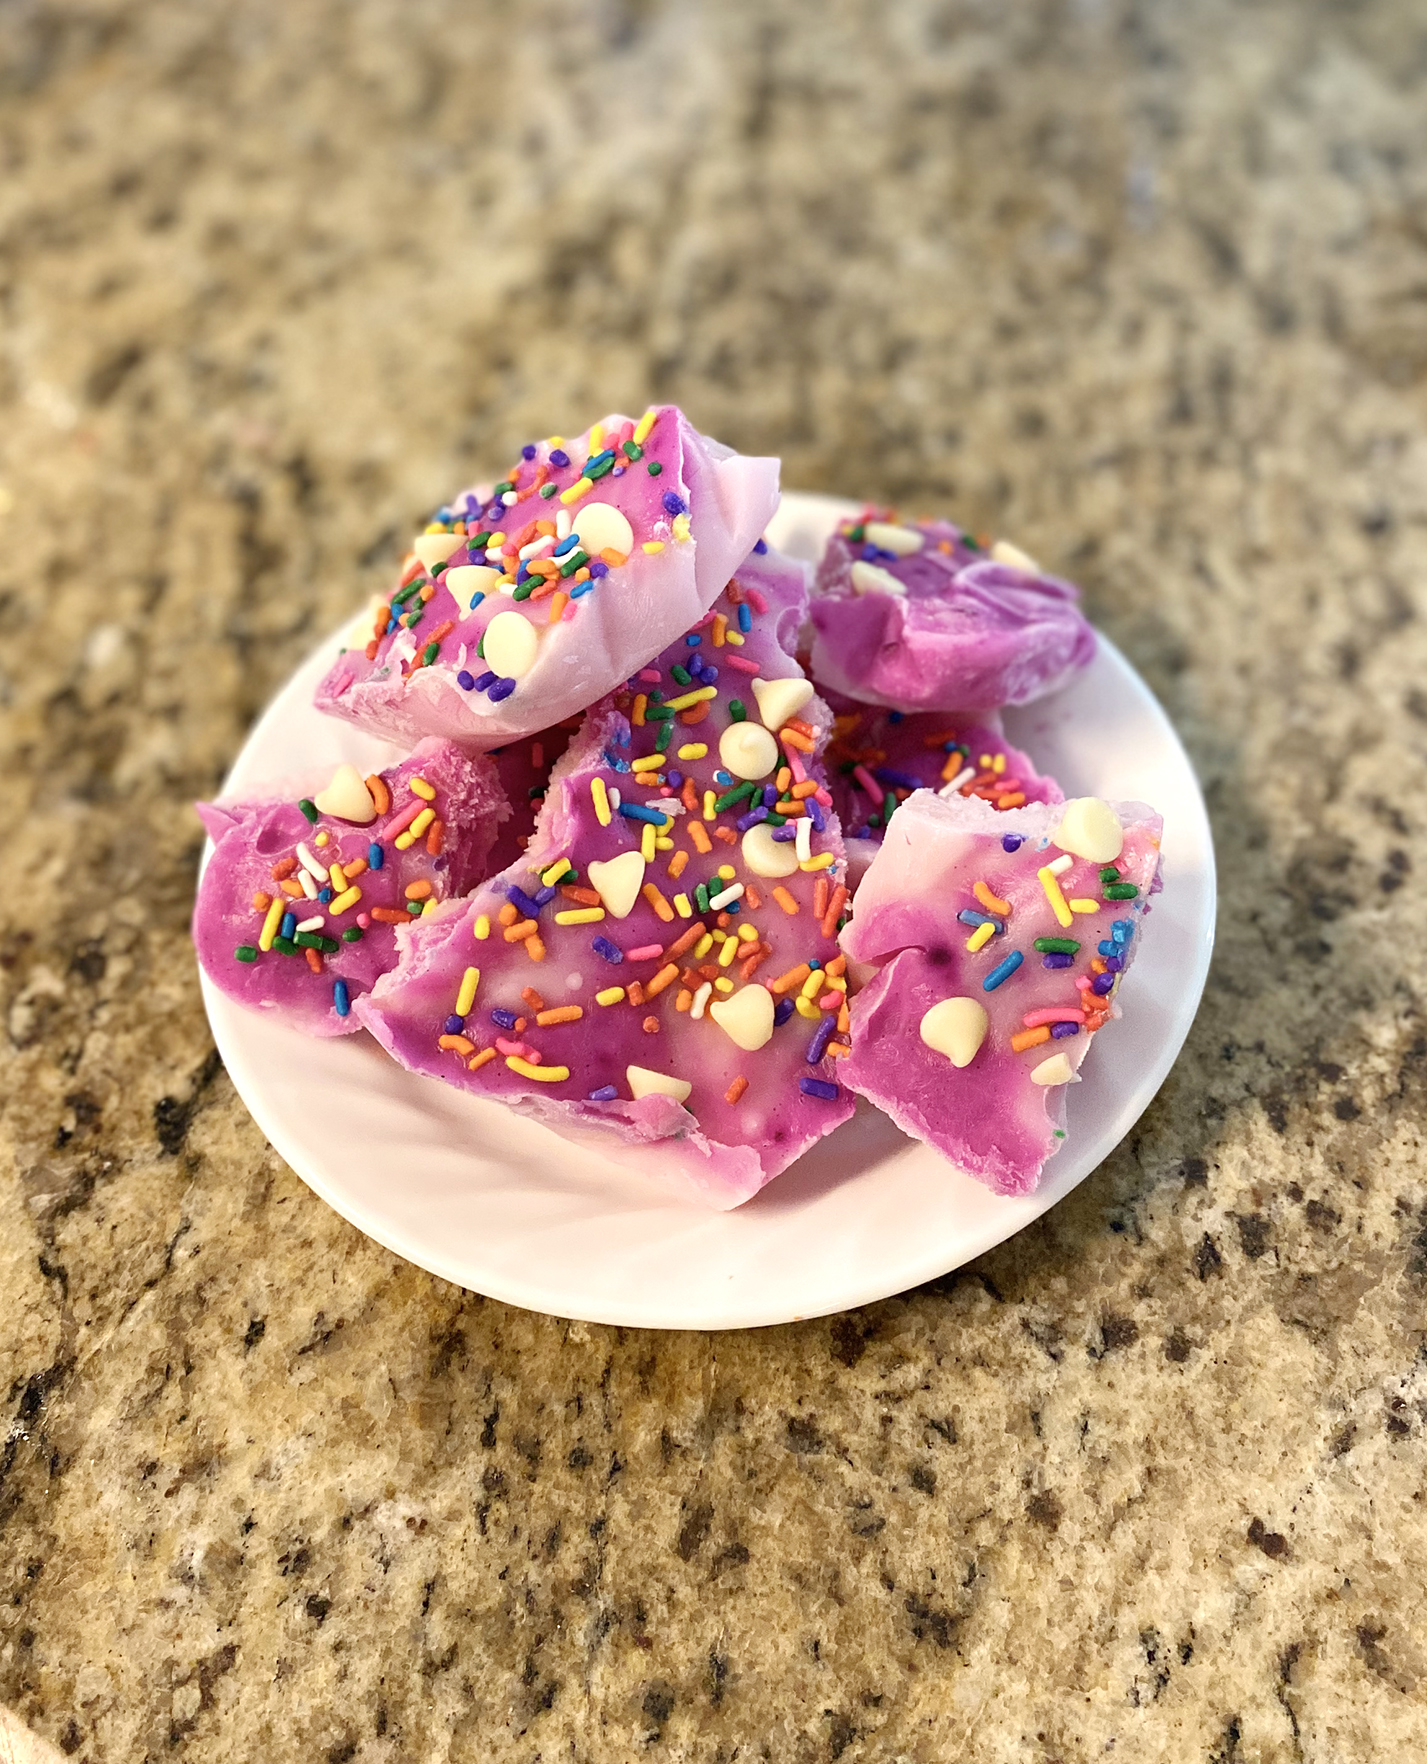 purple frozen yogurt bark with candy sprinkles